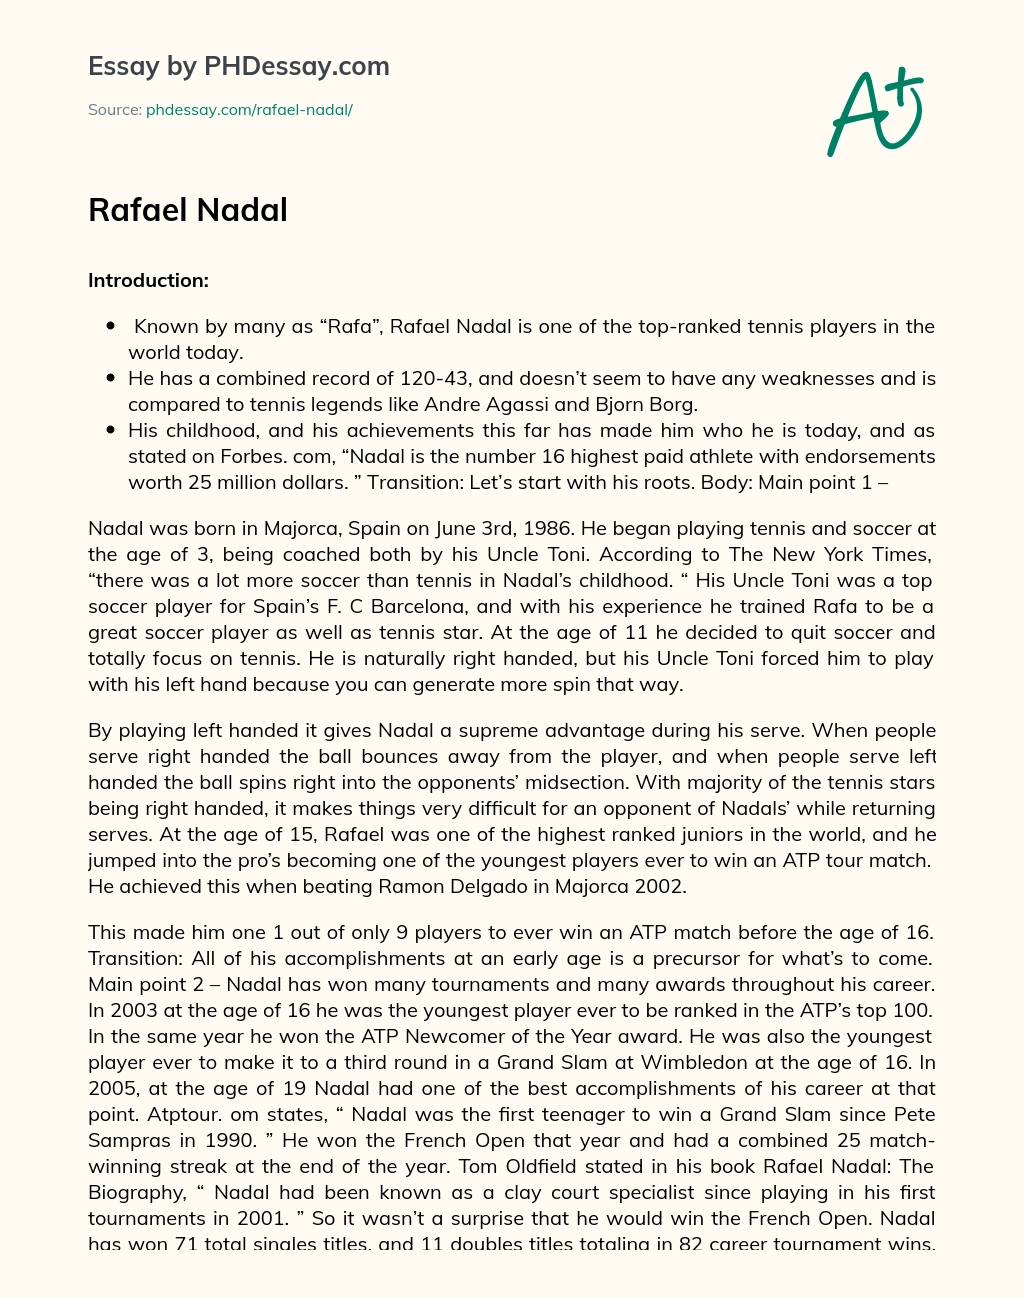 Rafael Nadal essay